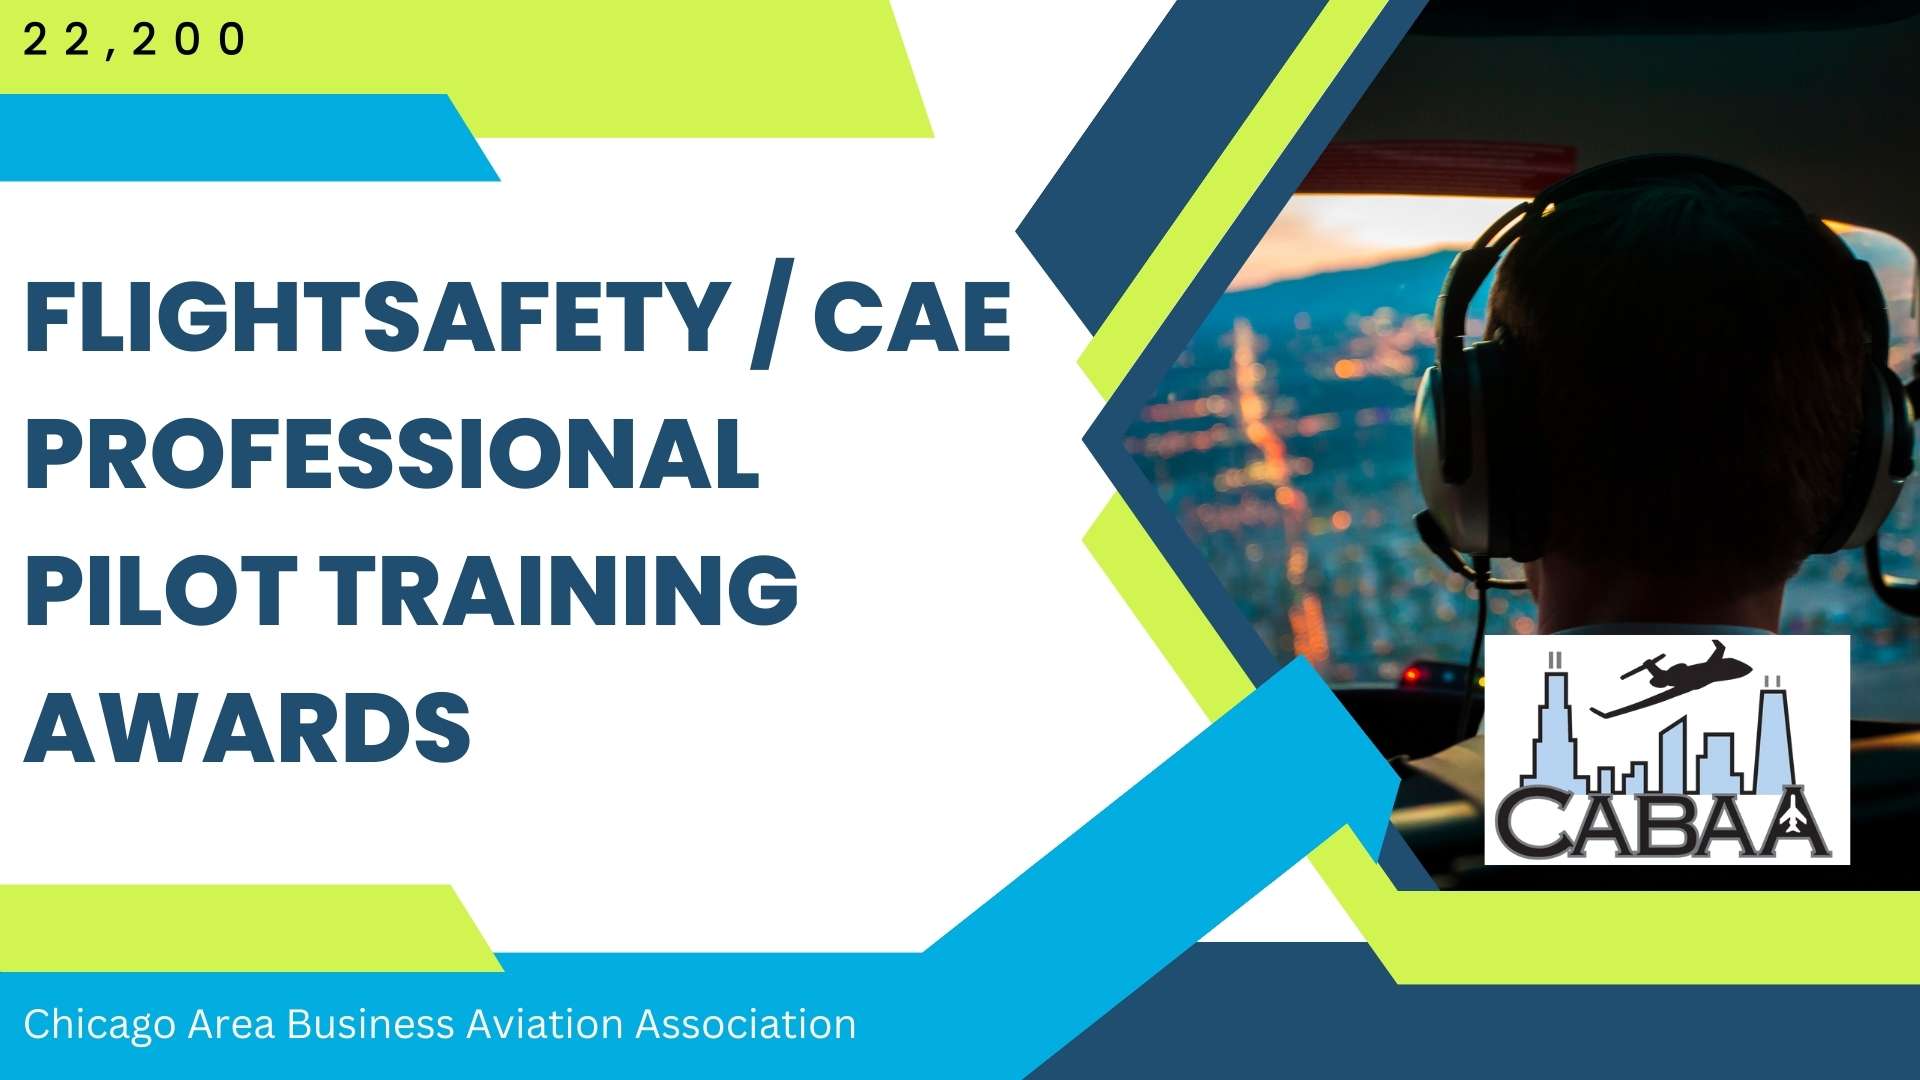 FlightSafety/CAE Professional Pilot Training Awards